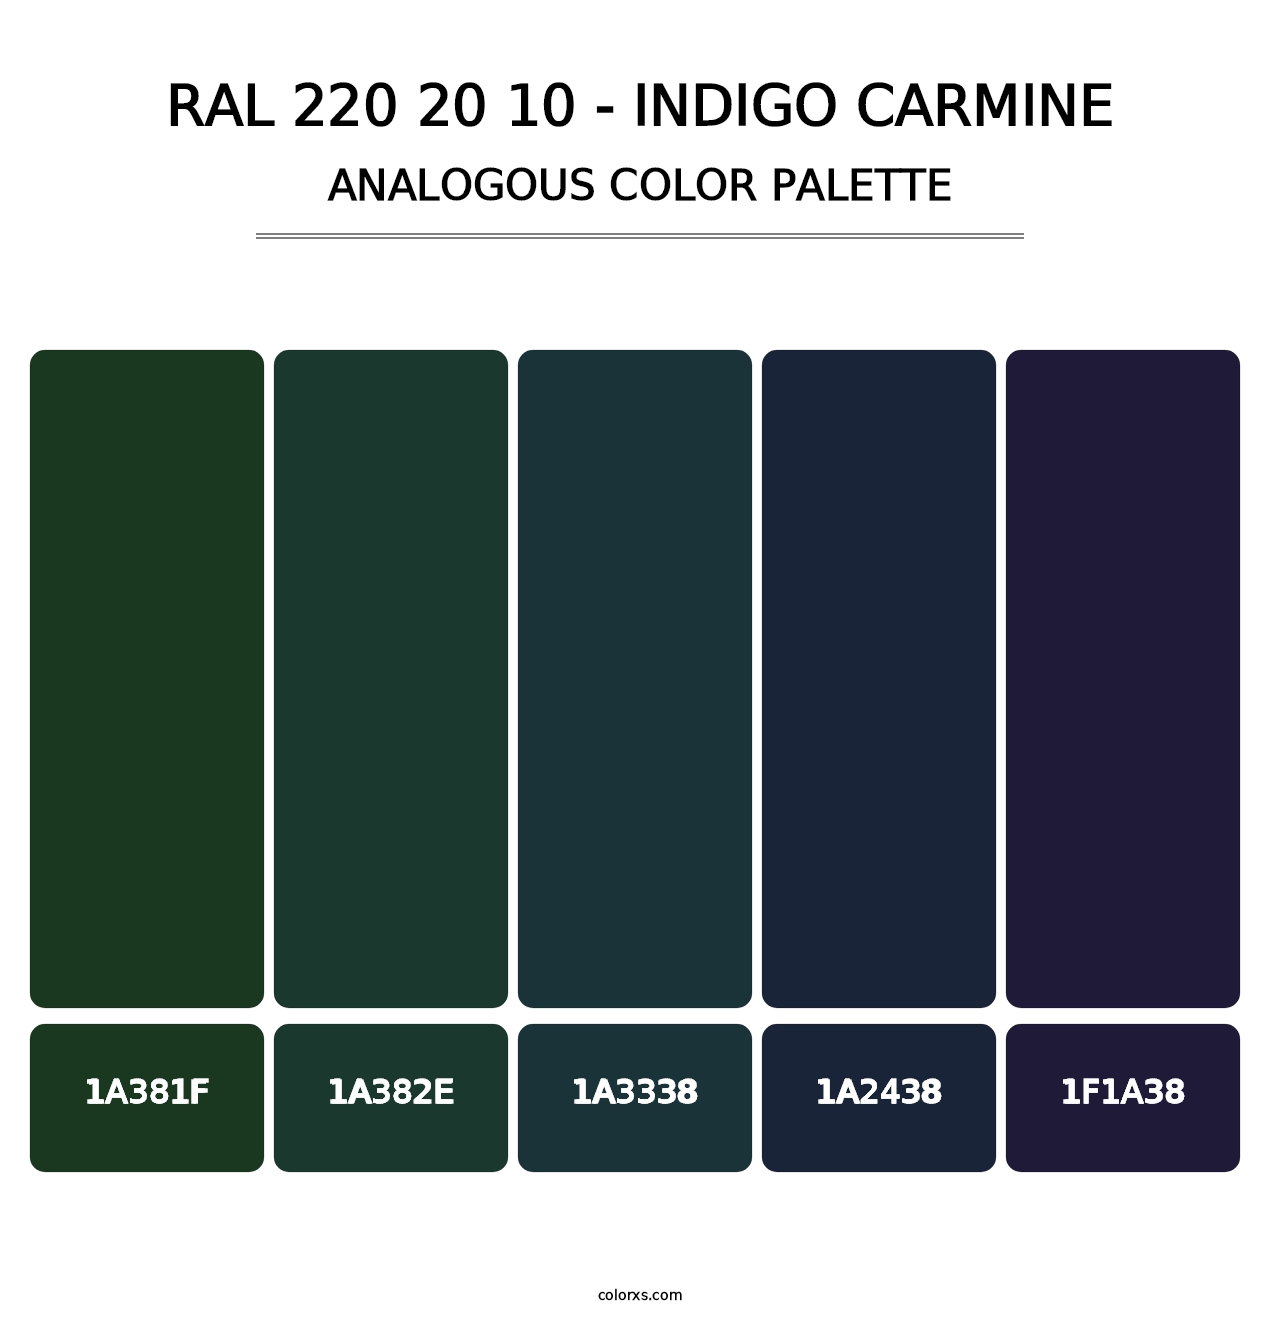 RAL 220 20 10 - Indigo Carmine - Analogous Color Palette